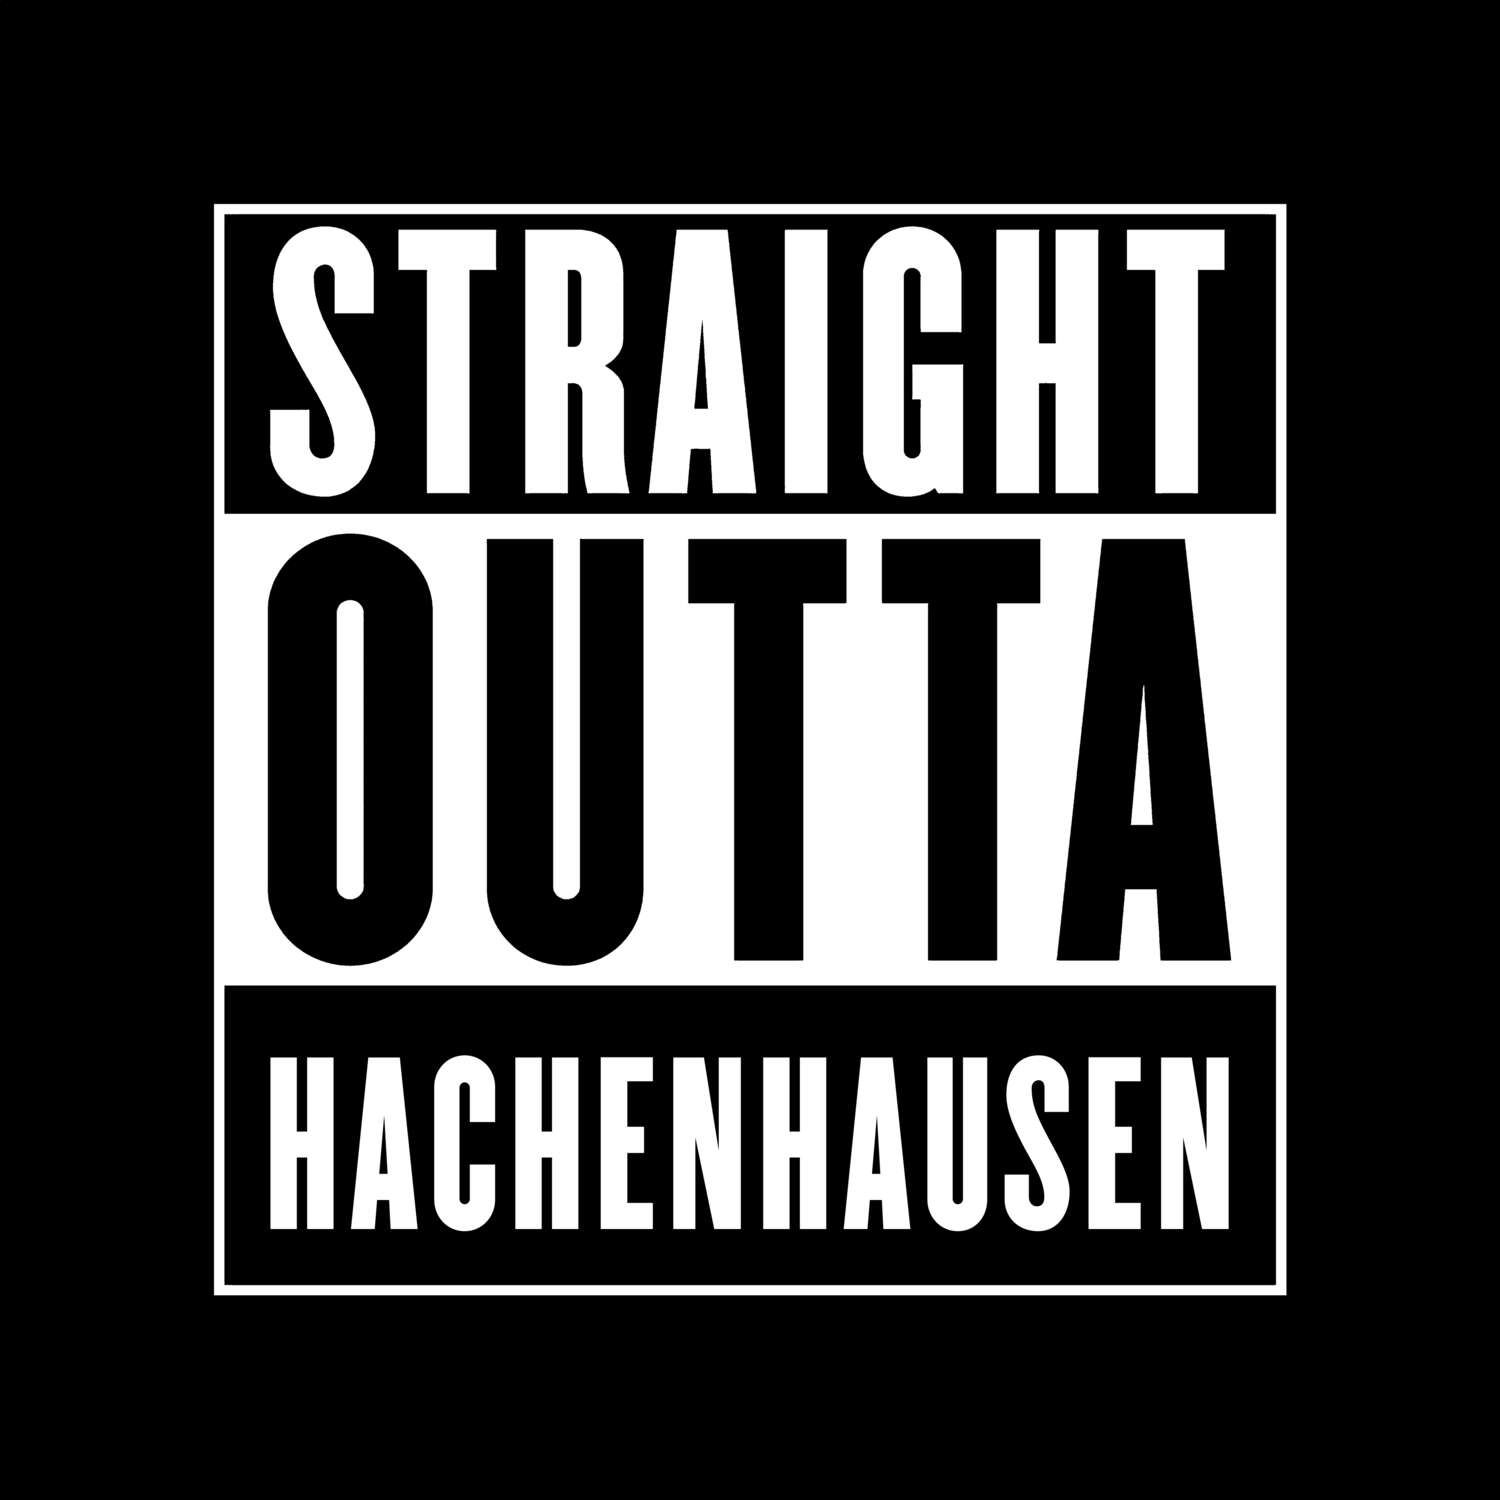 Hachenhausen T-Shirt »Straight Outta«